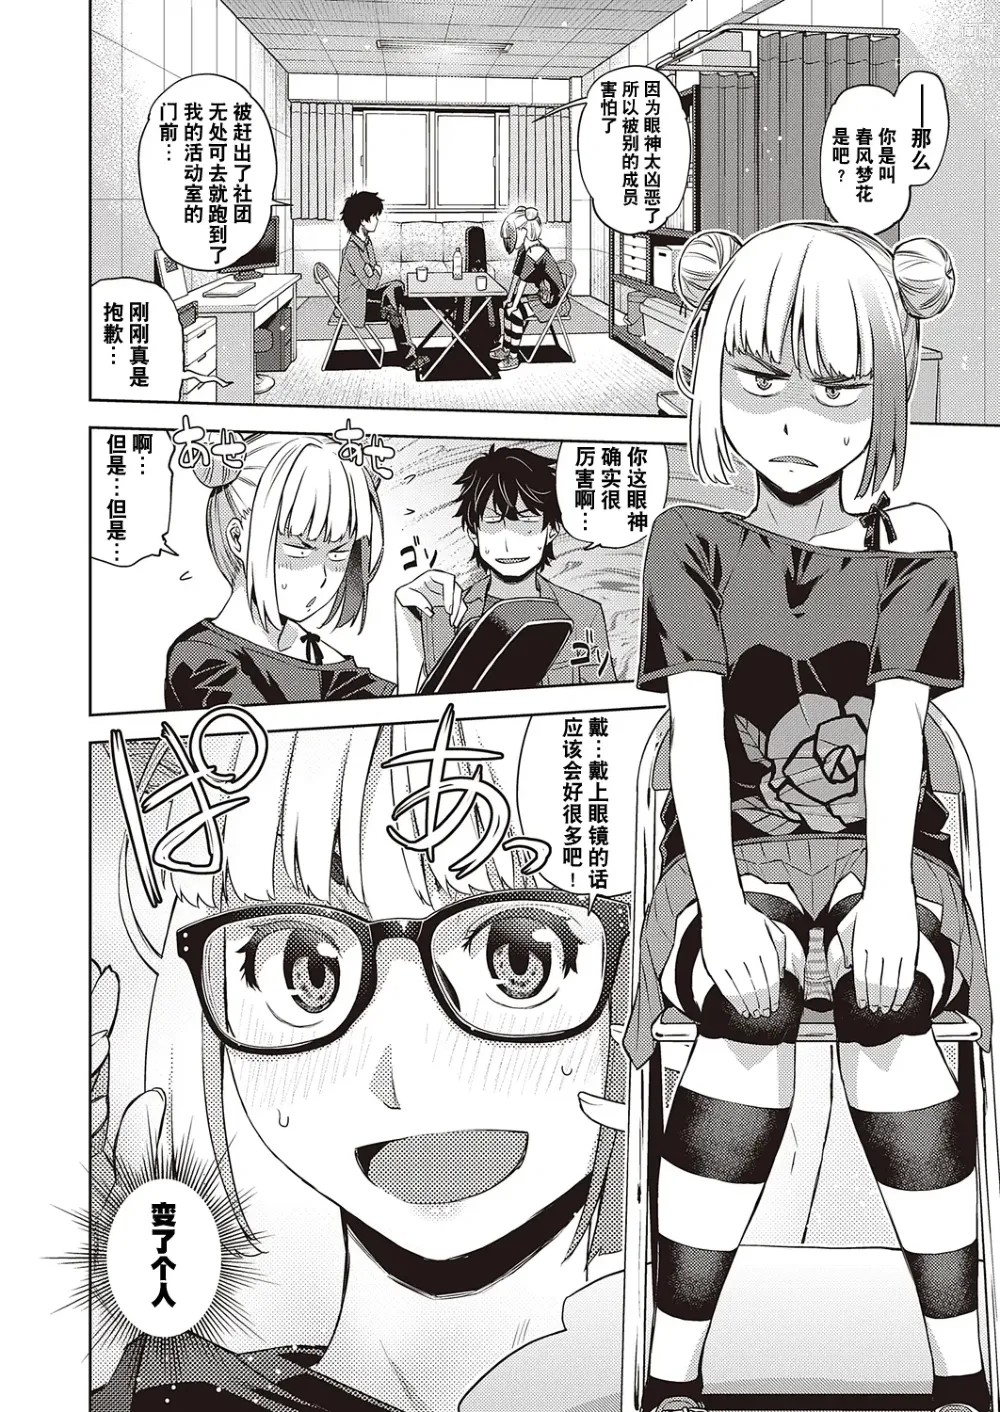 Page 2 of manga Houkago Megane Club